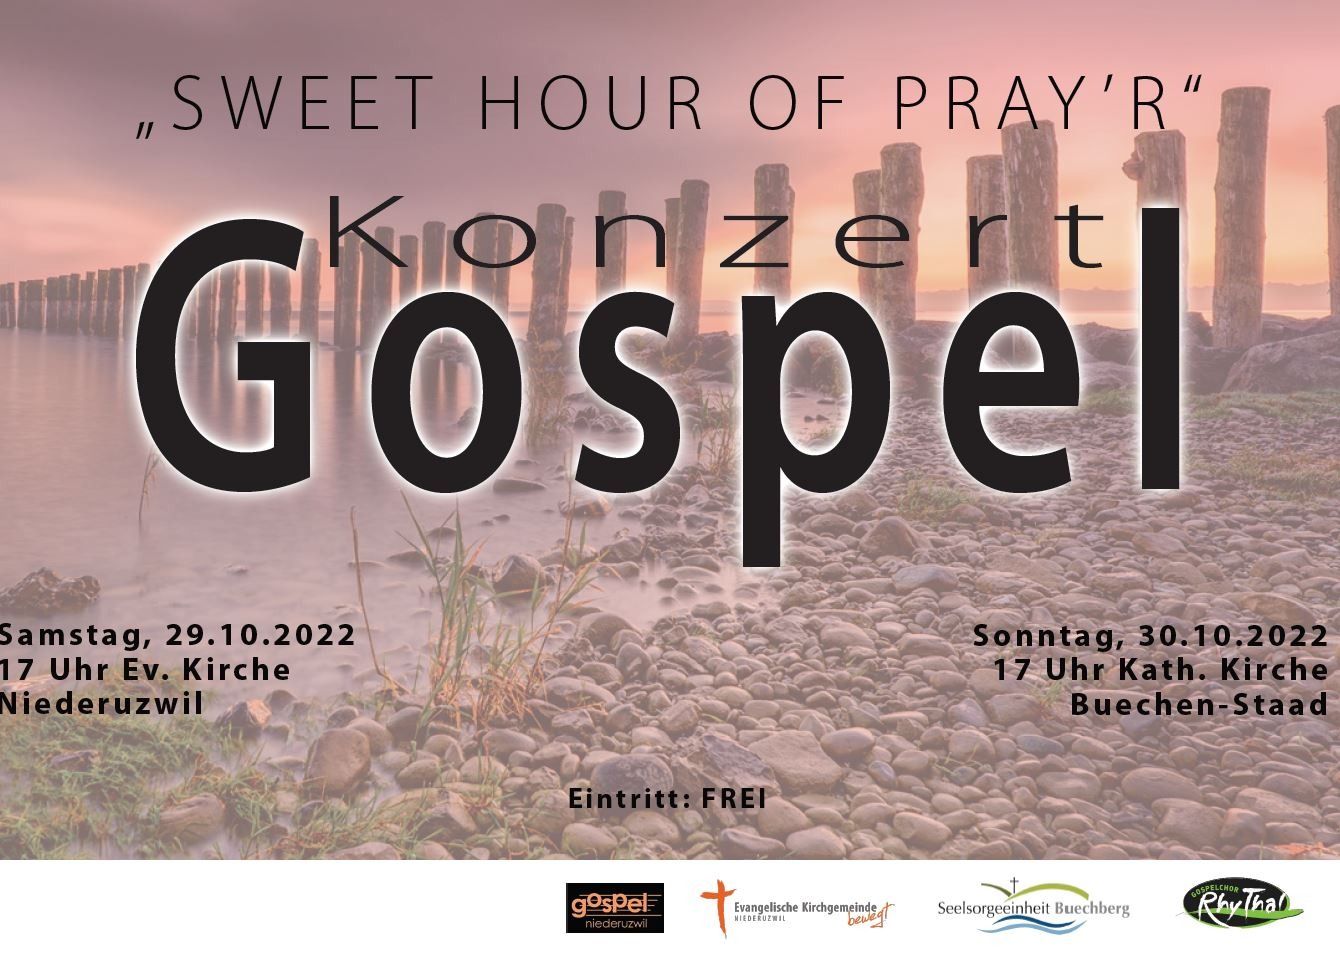 Sweet hour of pray'r - Gospelkonzert